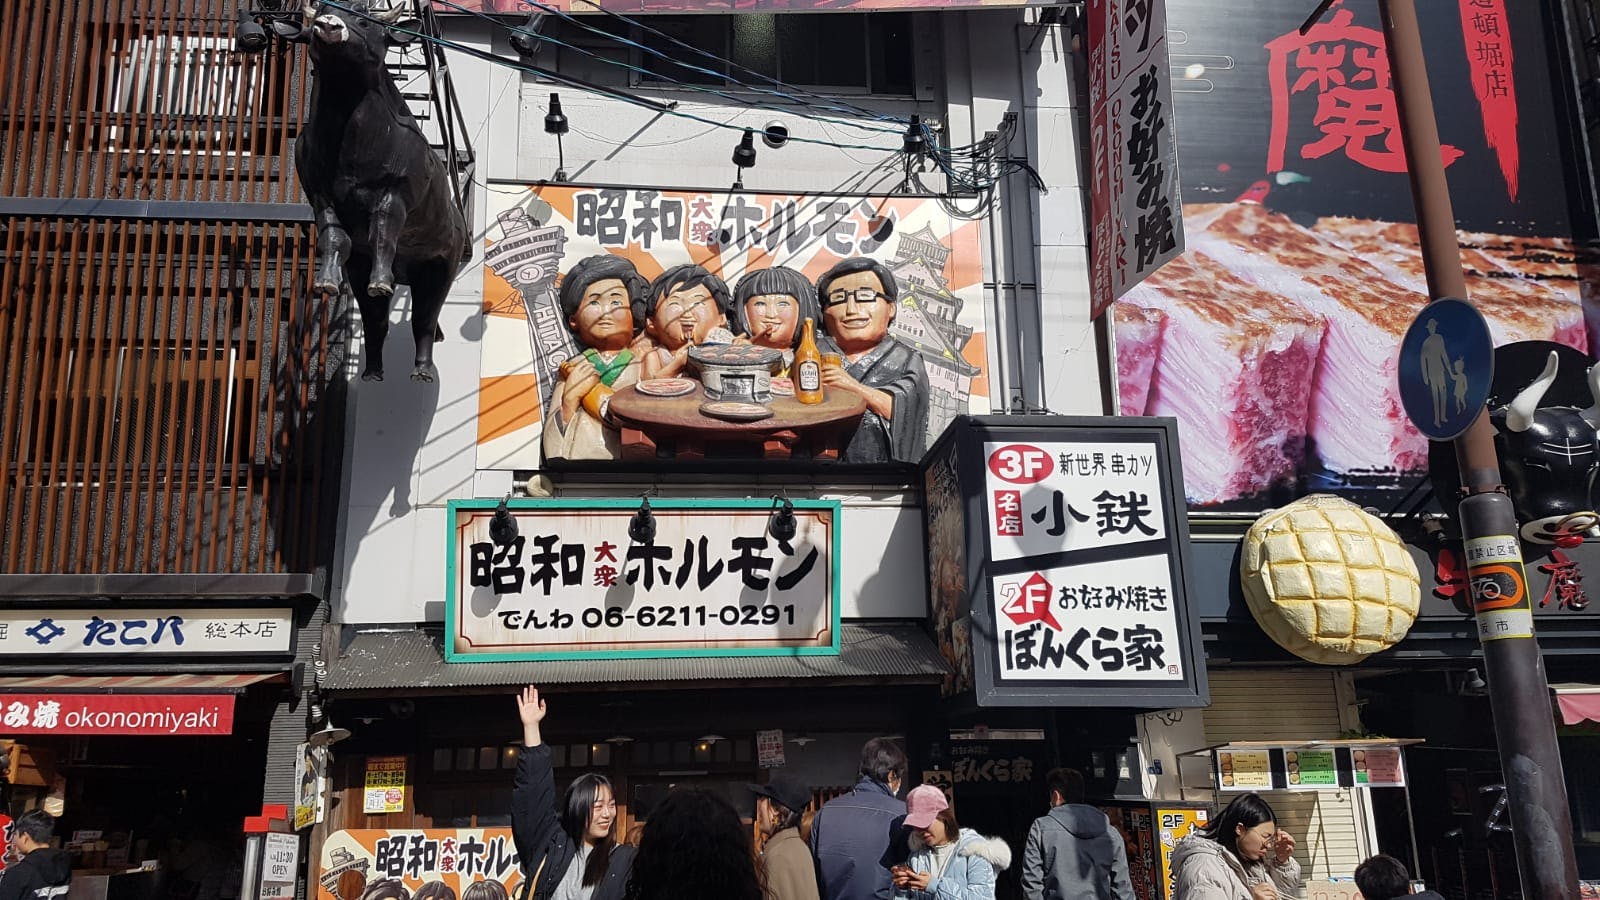 Osaka popular Japanese foods origins city game and tour Musement